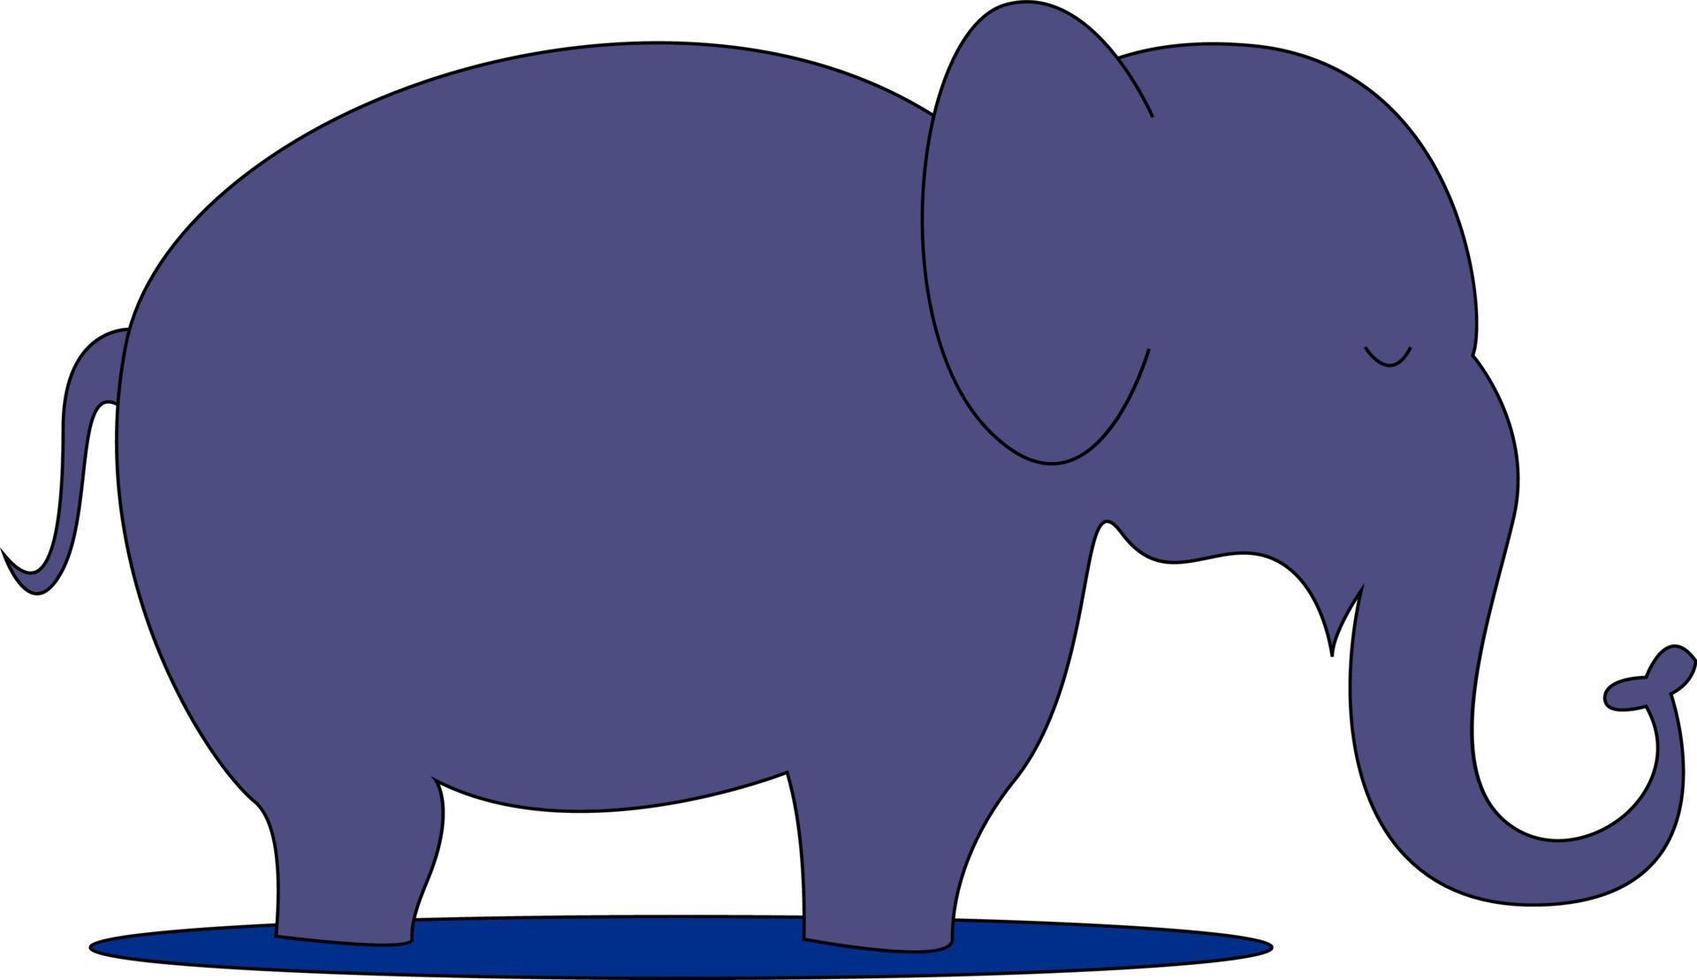 Purple elephant, illustration, vector on white background.